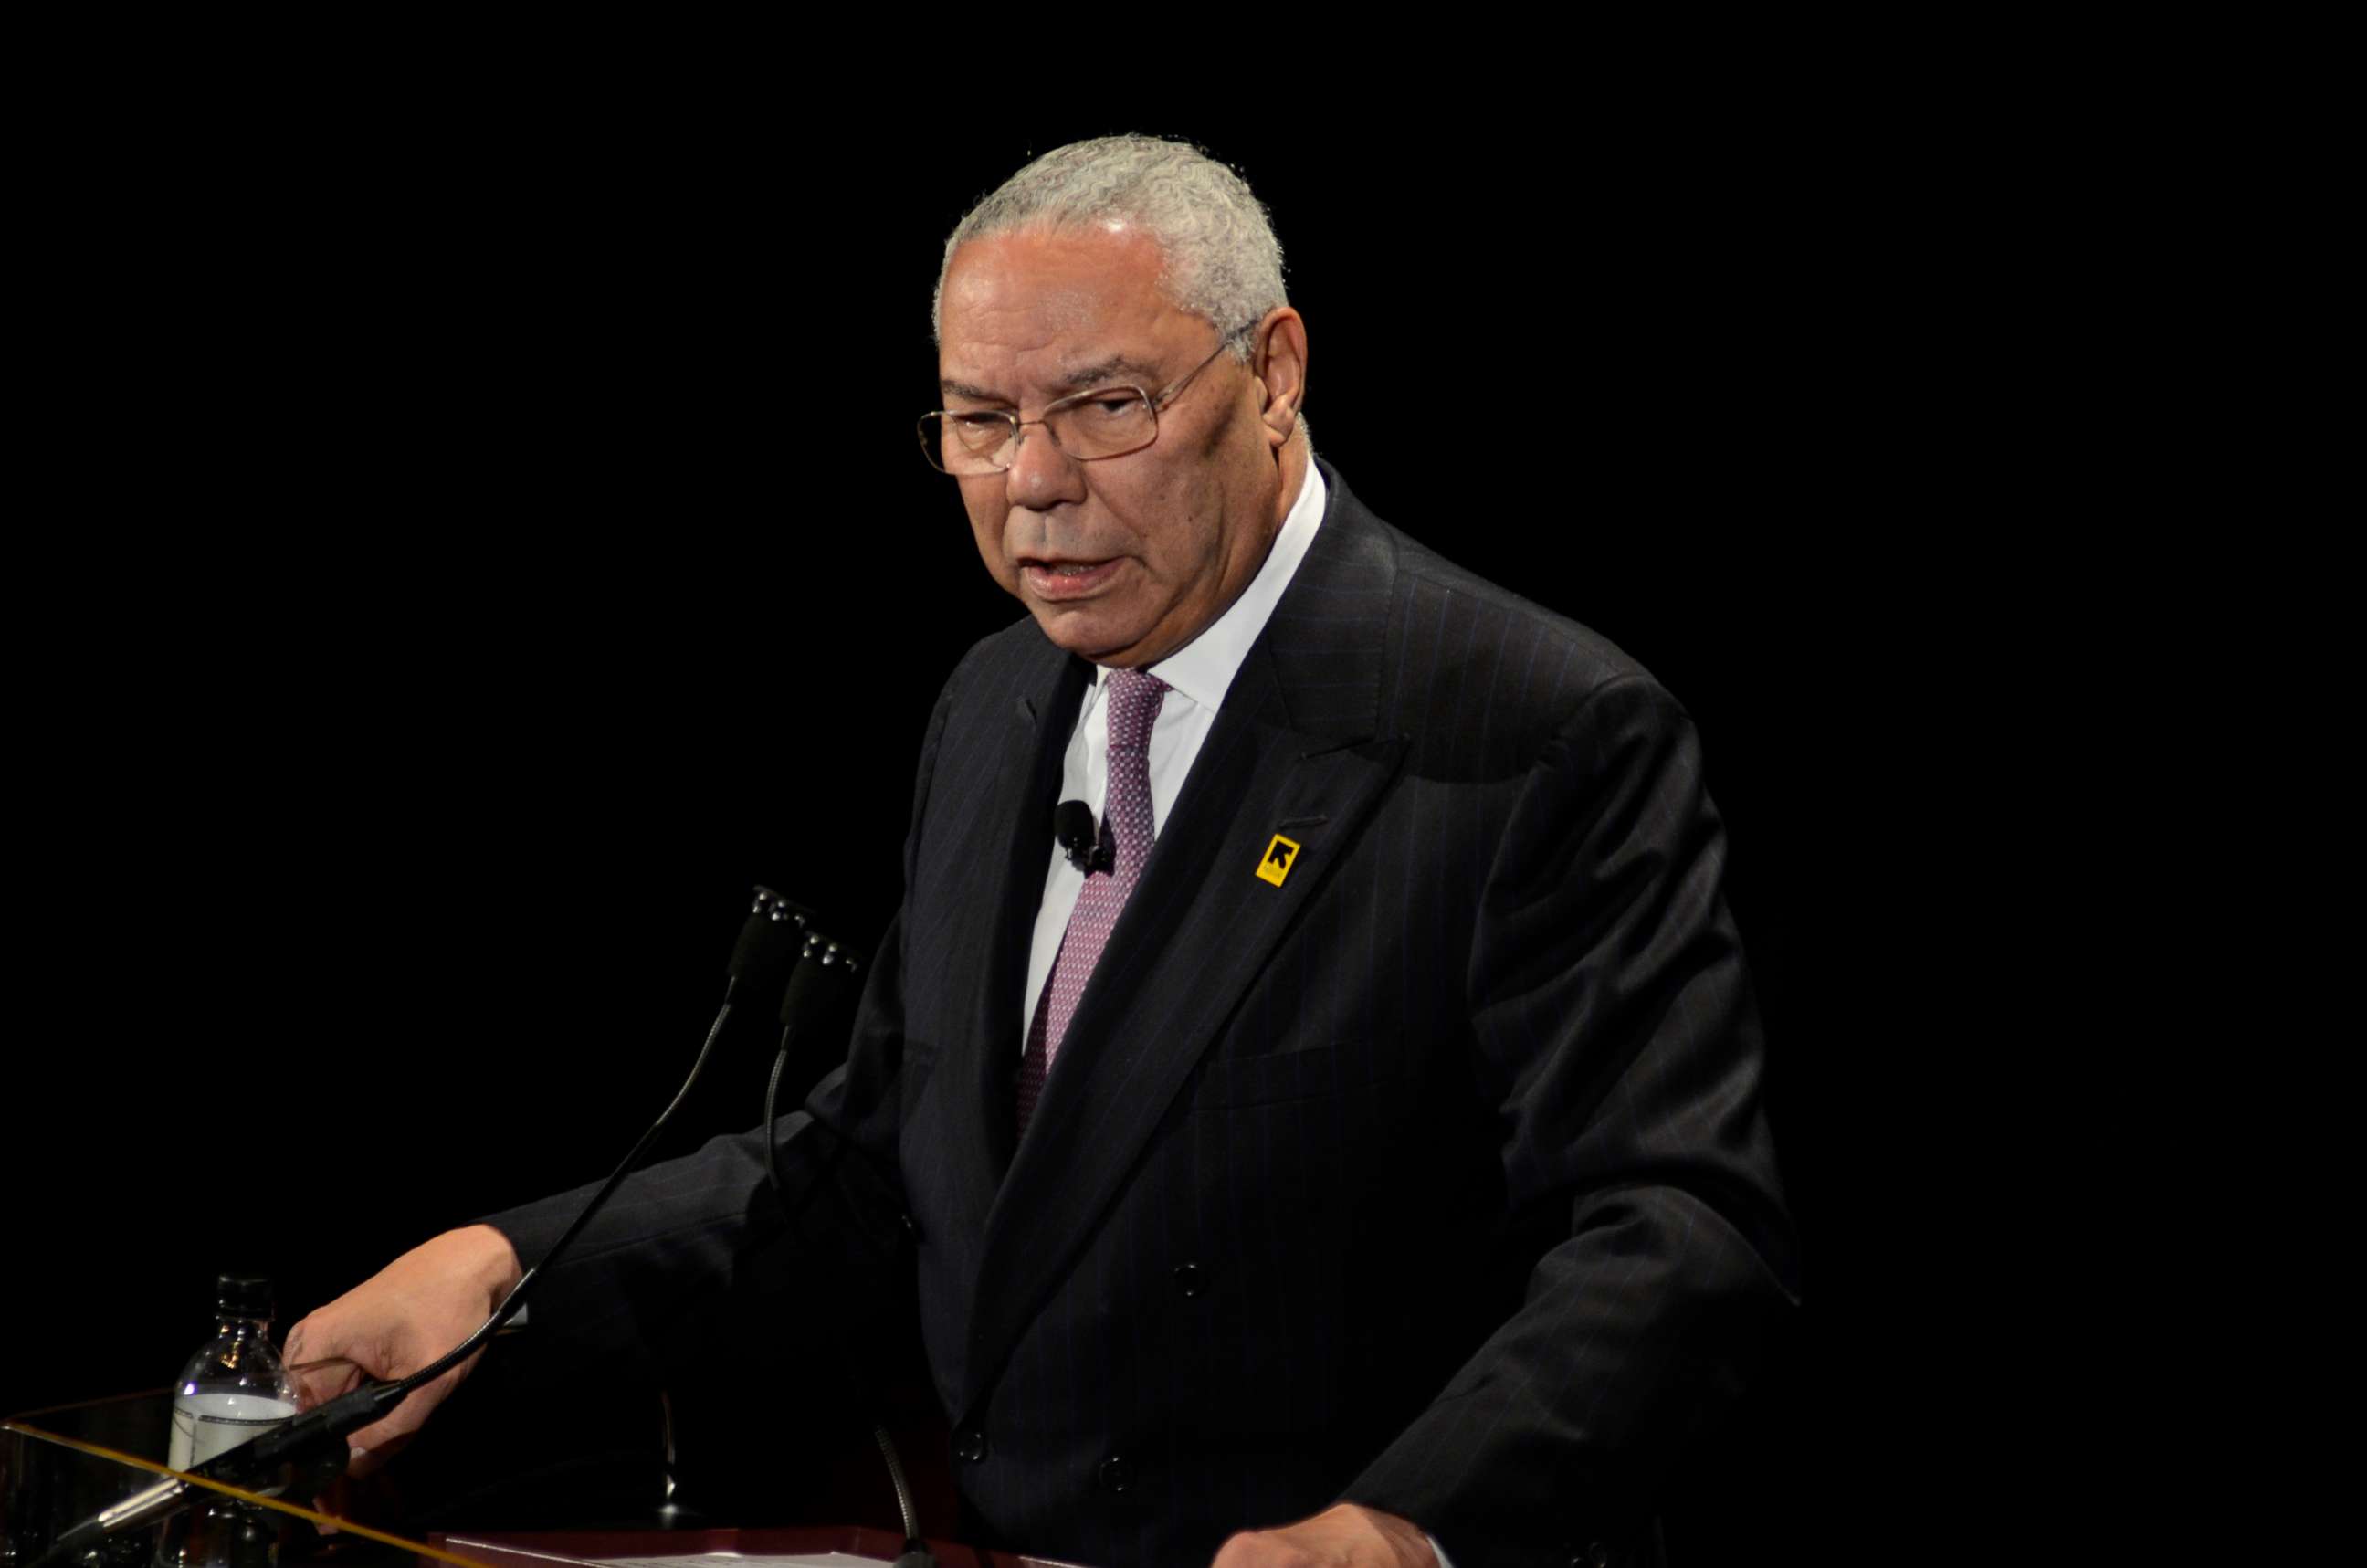 PHOTO: In this photo taken Nov. 9, 2011, Former Secretary of State Colin Powell speaks in New York.